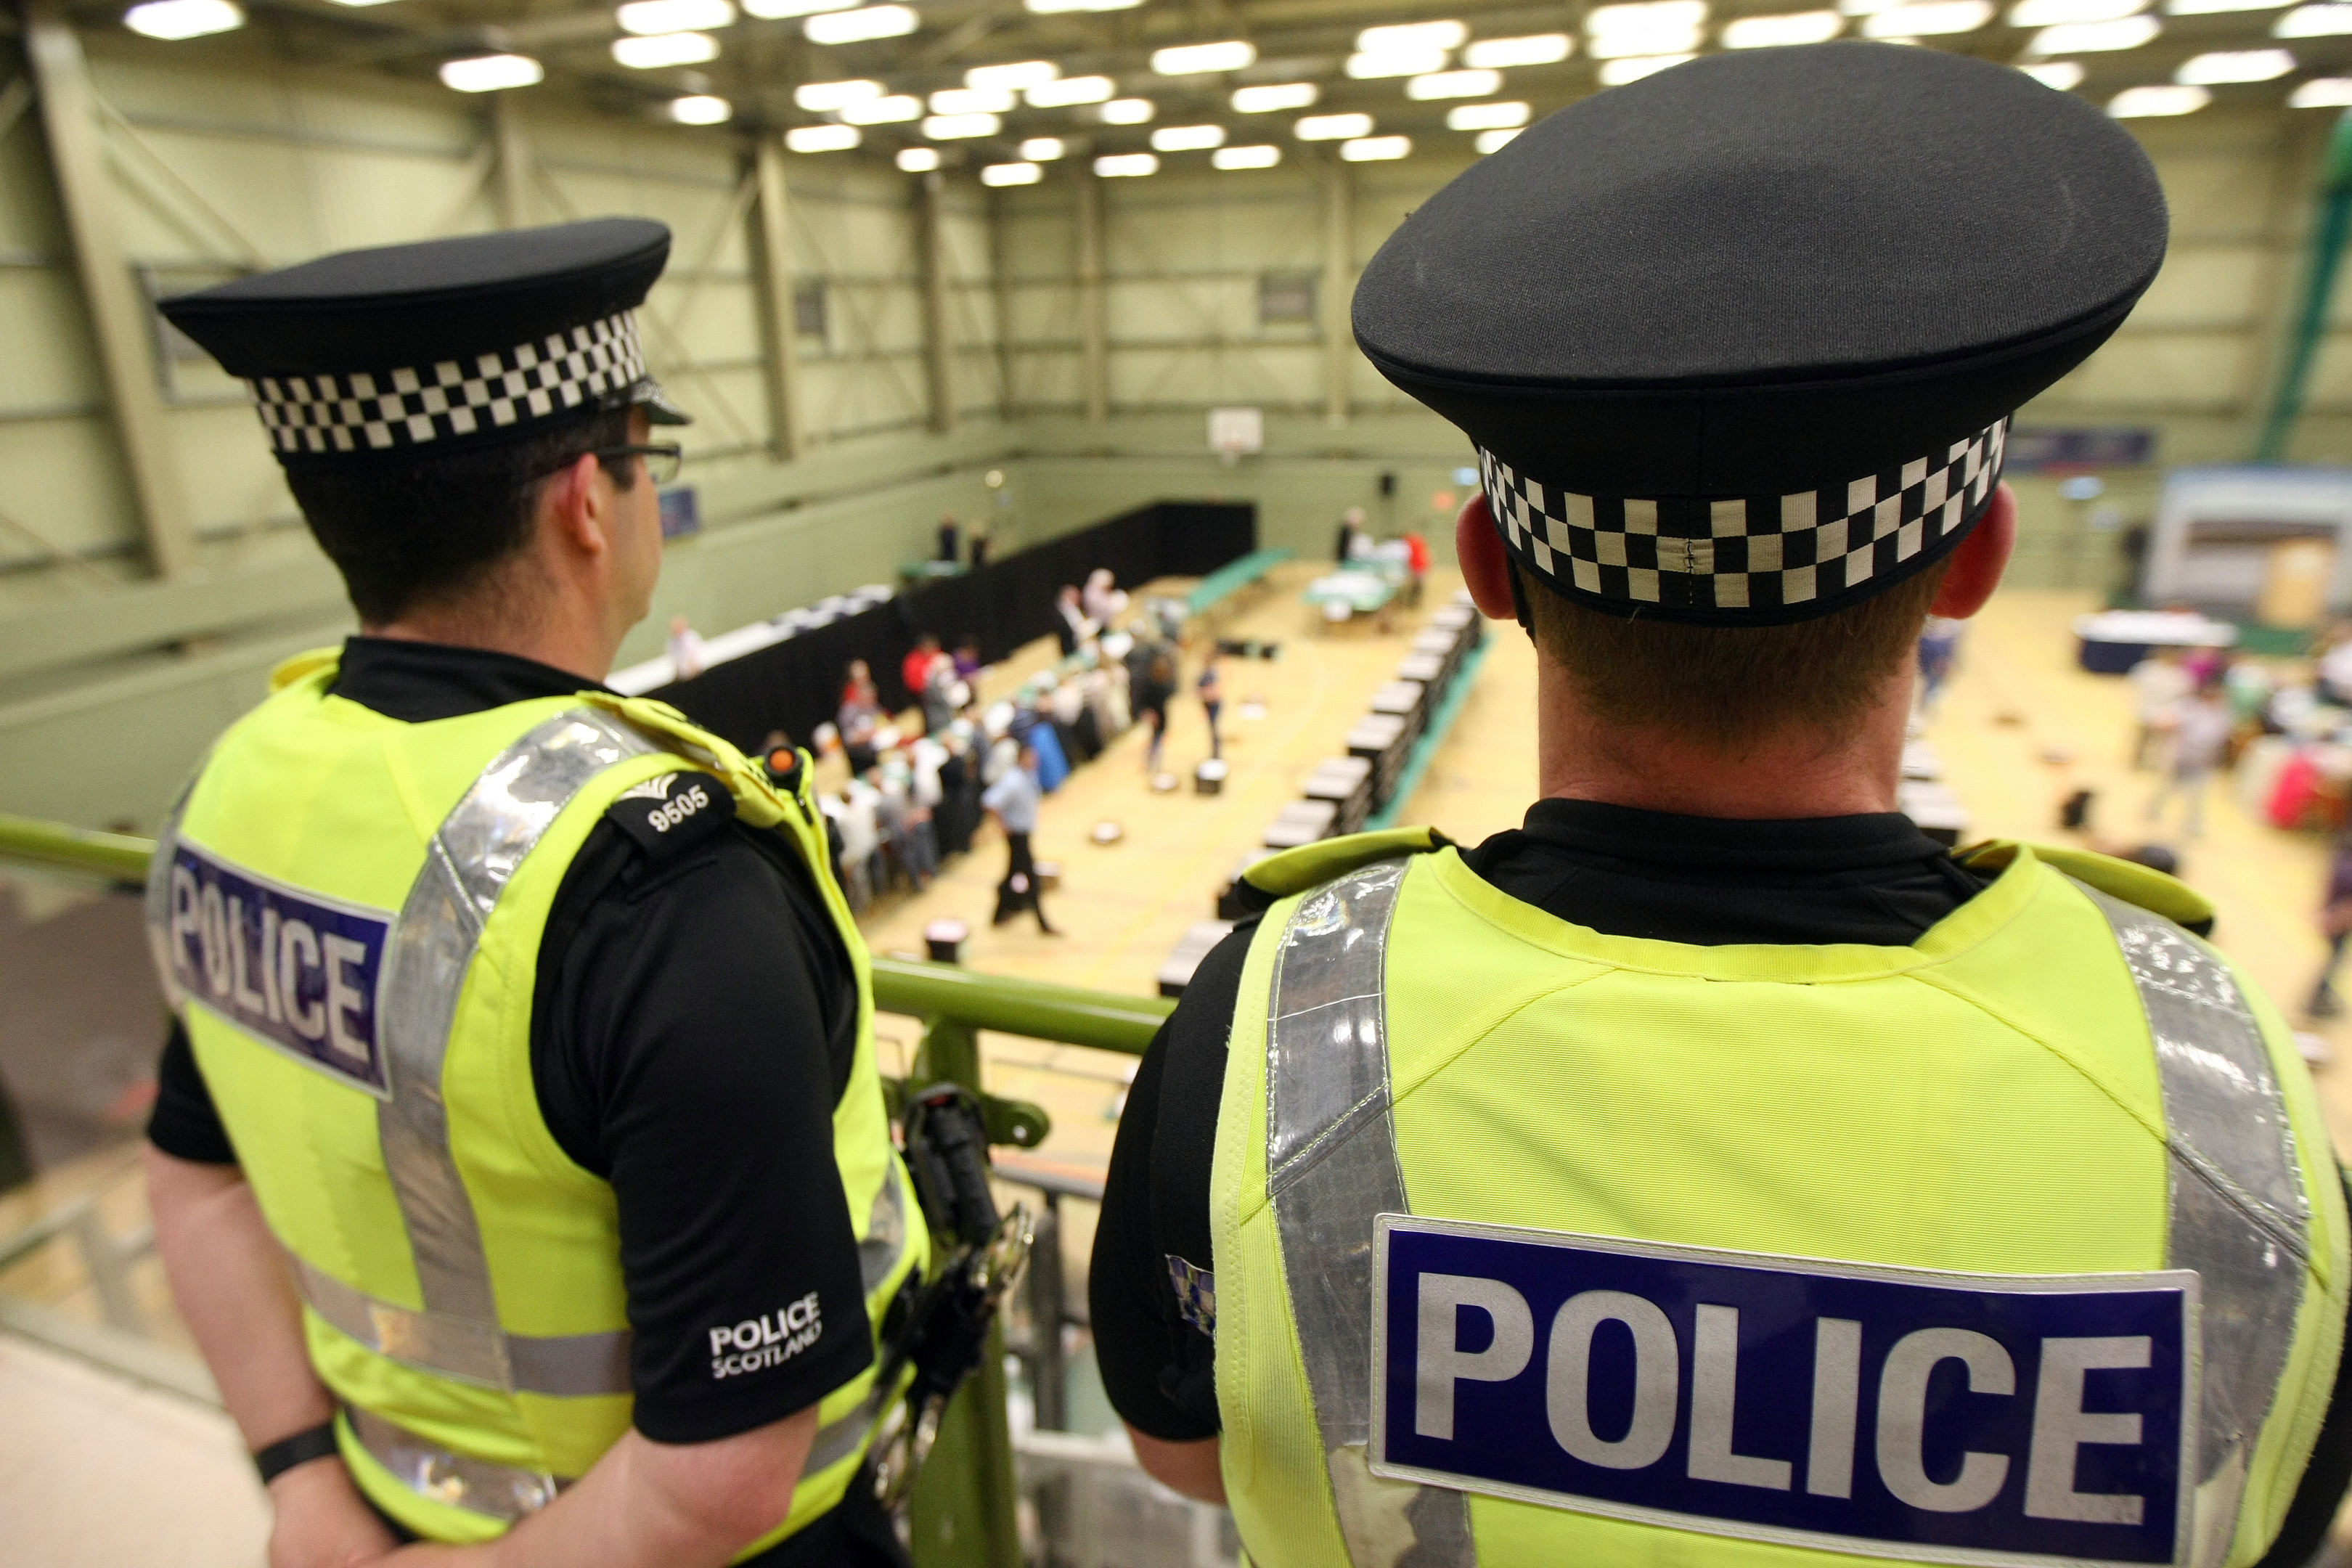 Police Scotland keeping an eye on proceedings tonight.